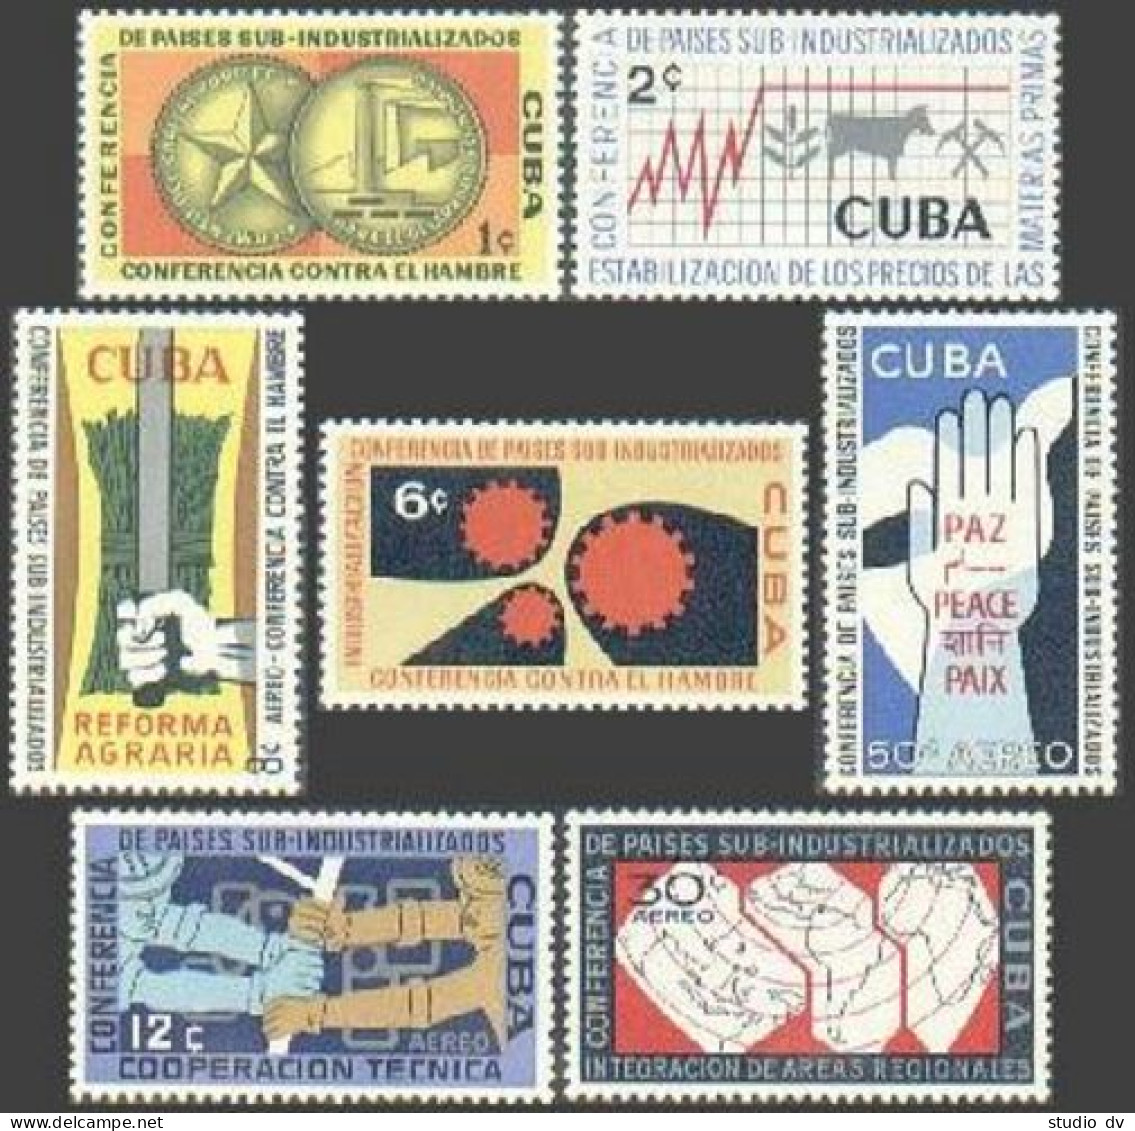 Cuba 663-665,C215-C218, Lightly Hinged. Mi 696-702. Agriculture, Industry. 1961. - Ongebruikt